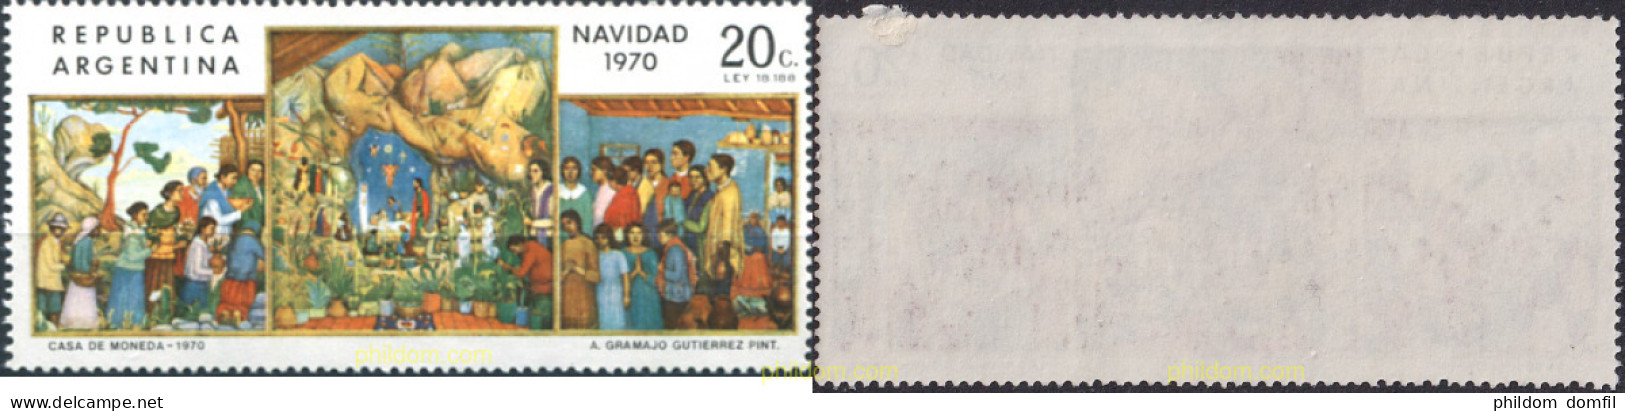 727270 MNH ARGENTINA 1970 NAVIDAD - Nuovi